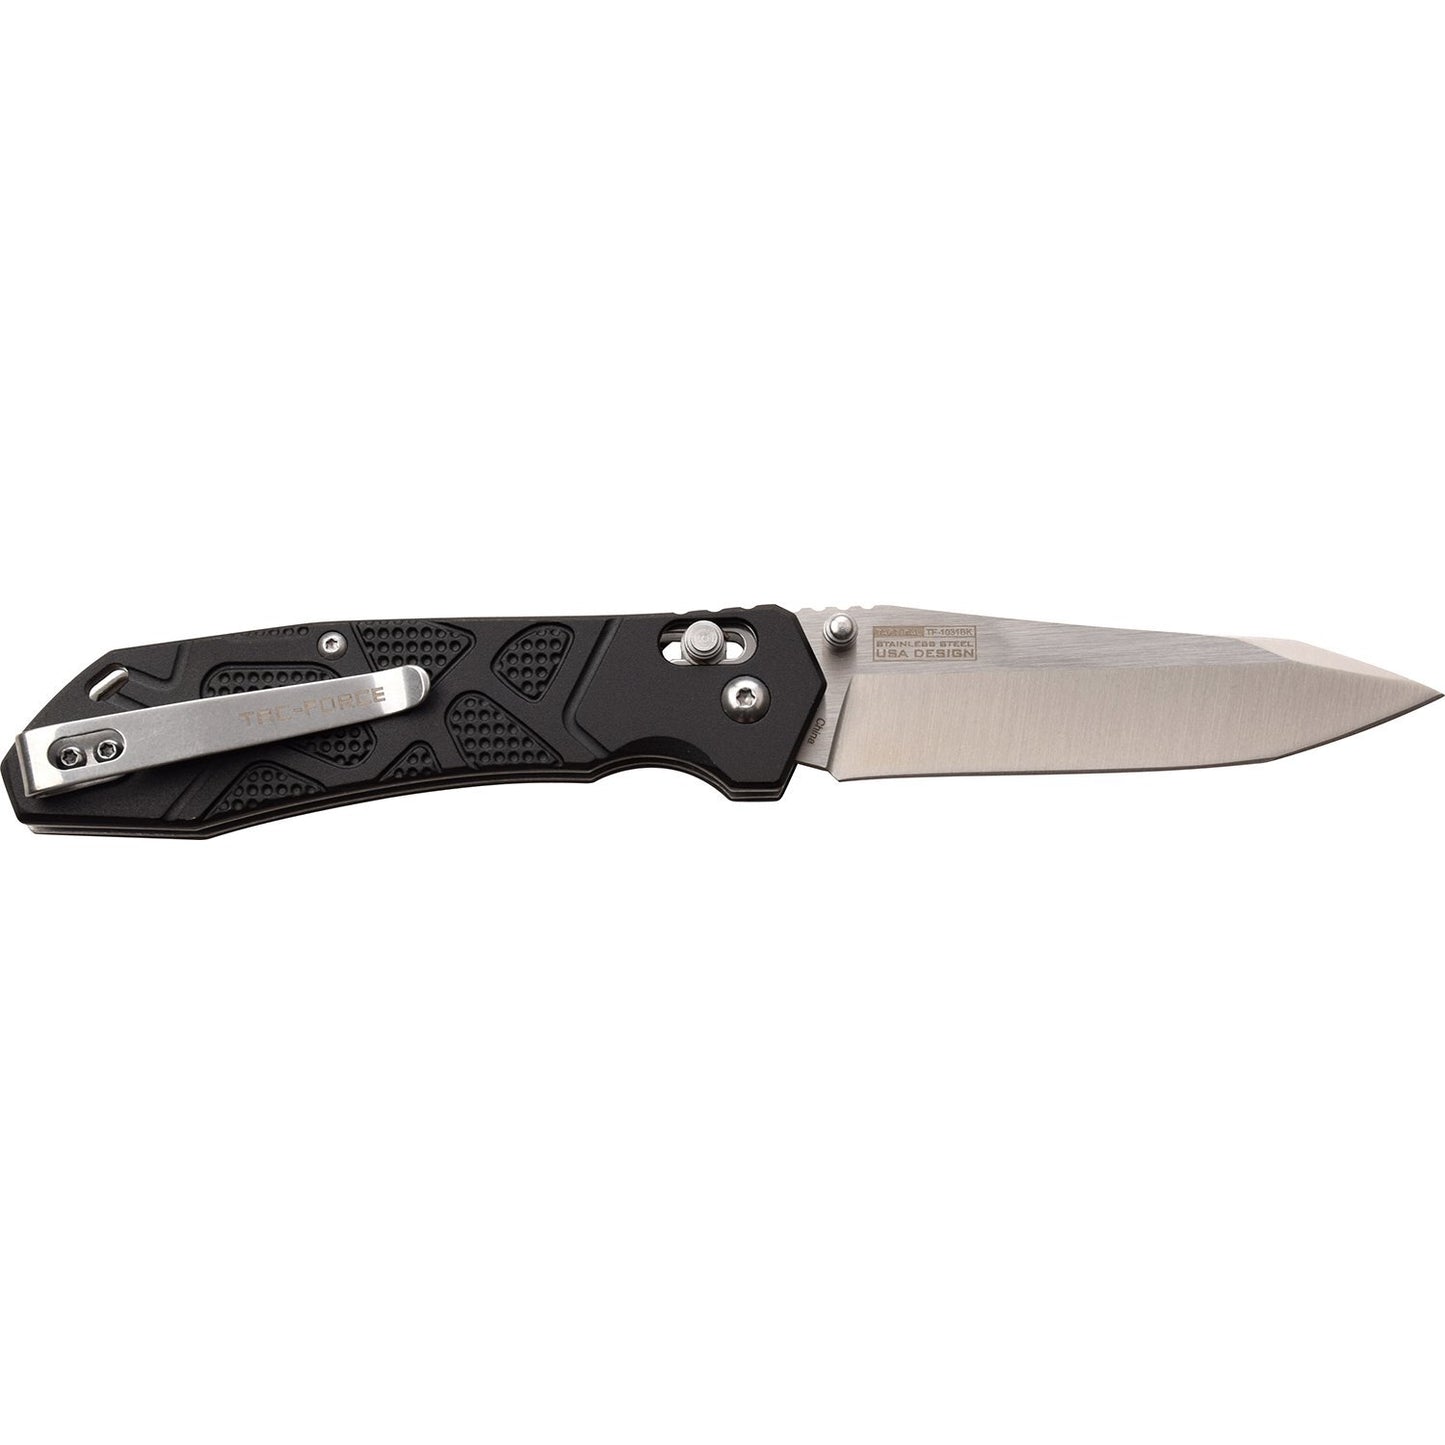 Tac-Force Tac-Force 8 Inch Hunting Tanto Manual Folding Knife - Black #tf-1031Bk Dark Slate Gray